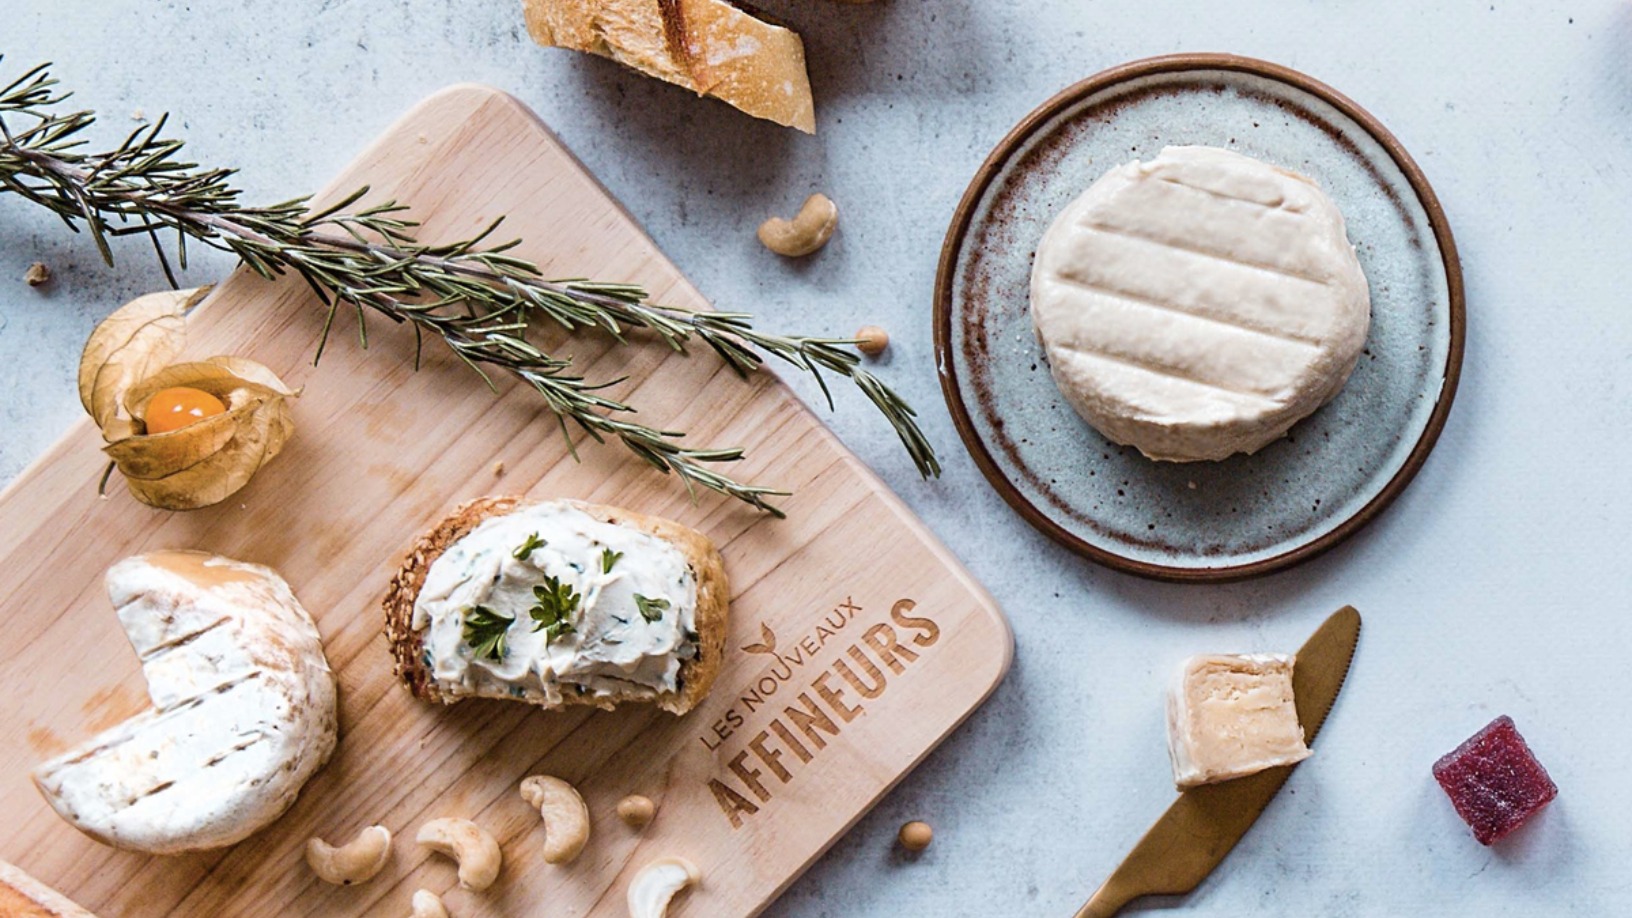 Les Nouveaux Affineurs: Disrupting centuries-old French cheese culture